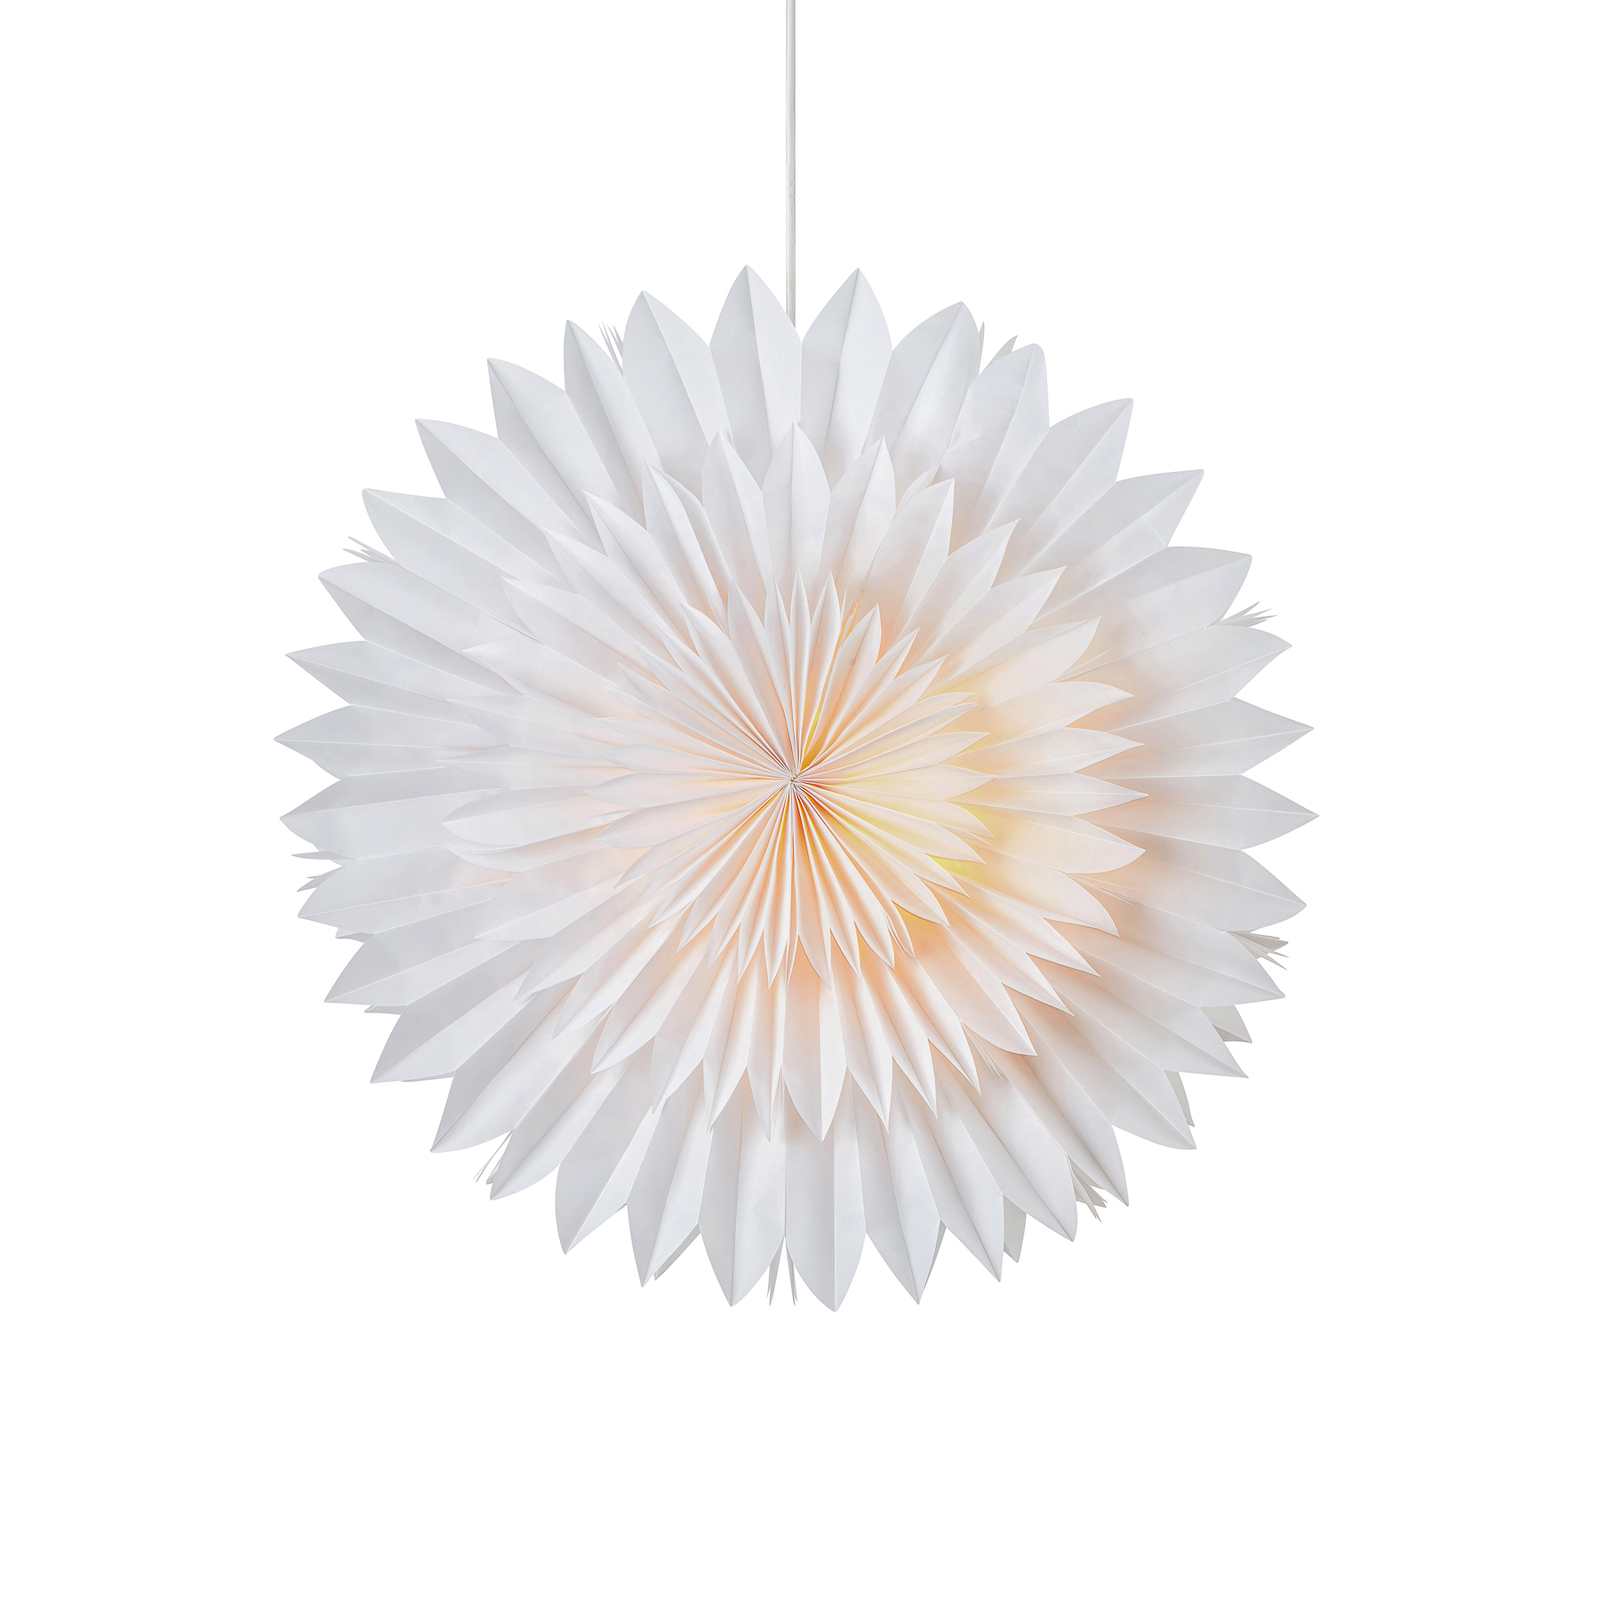 Solina decorative star, hanging, white, Ø 45 cm